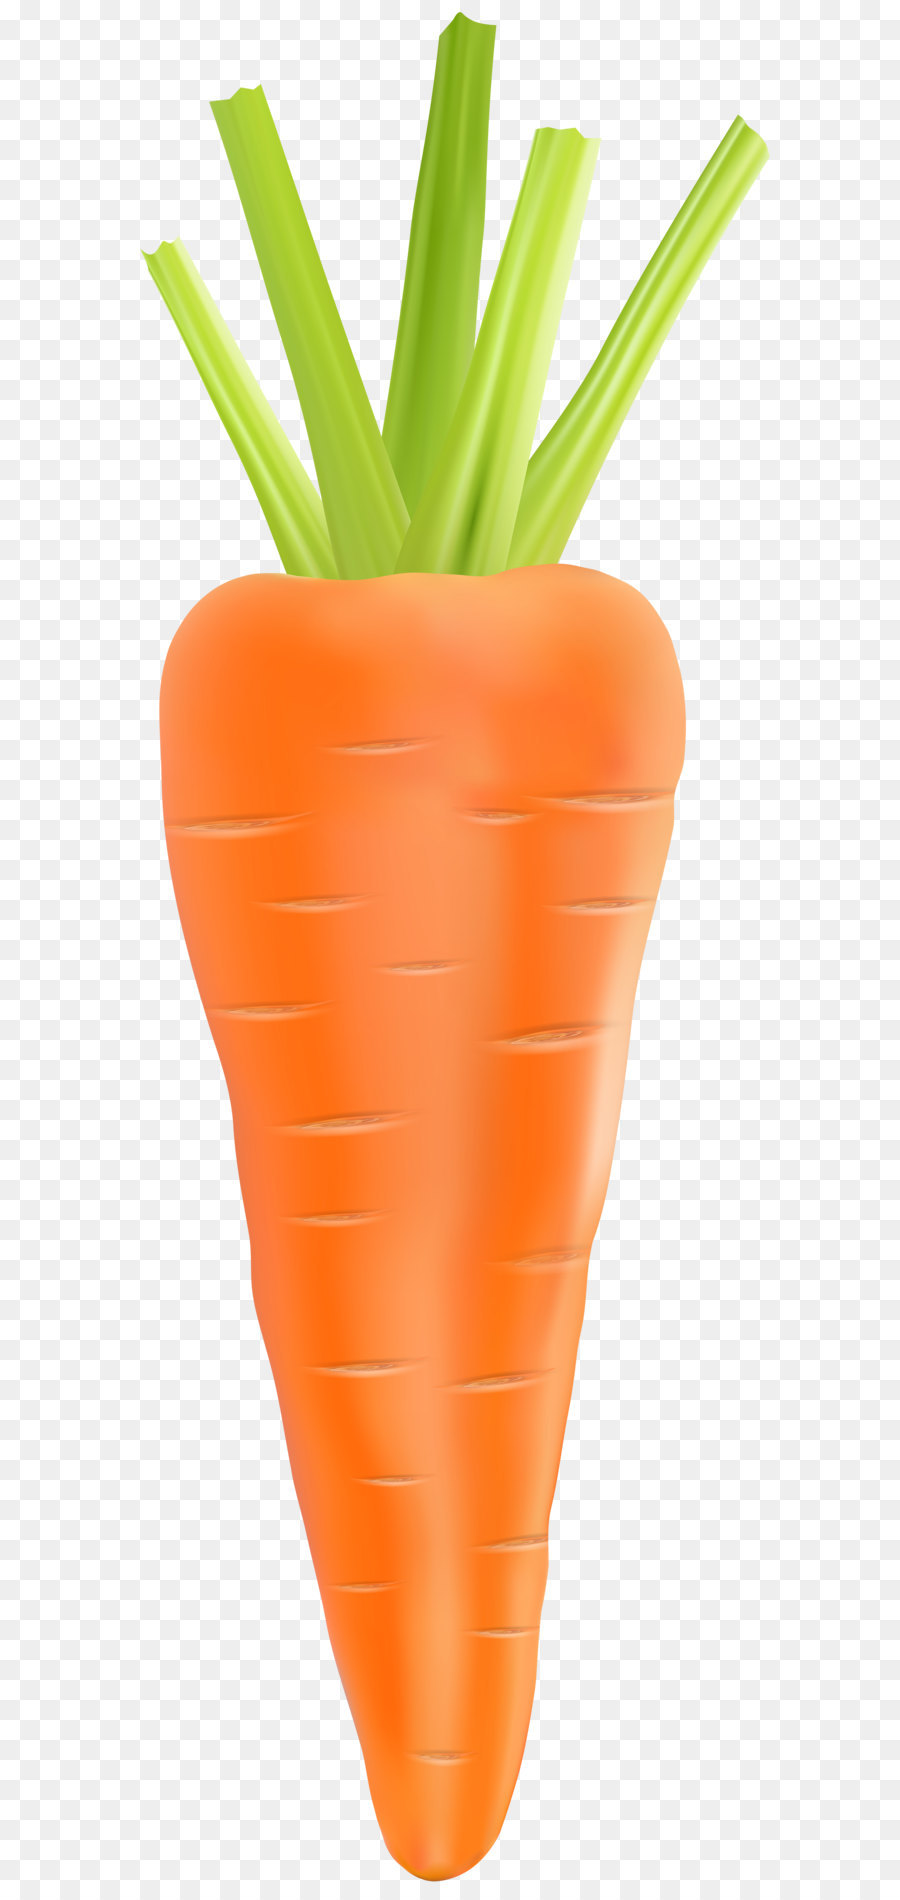 Carrot Vegetable - Carrot Transparent PNG Clip Art Image png download - 2753*8000 - Free Transparent Carrot png Download.